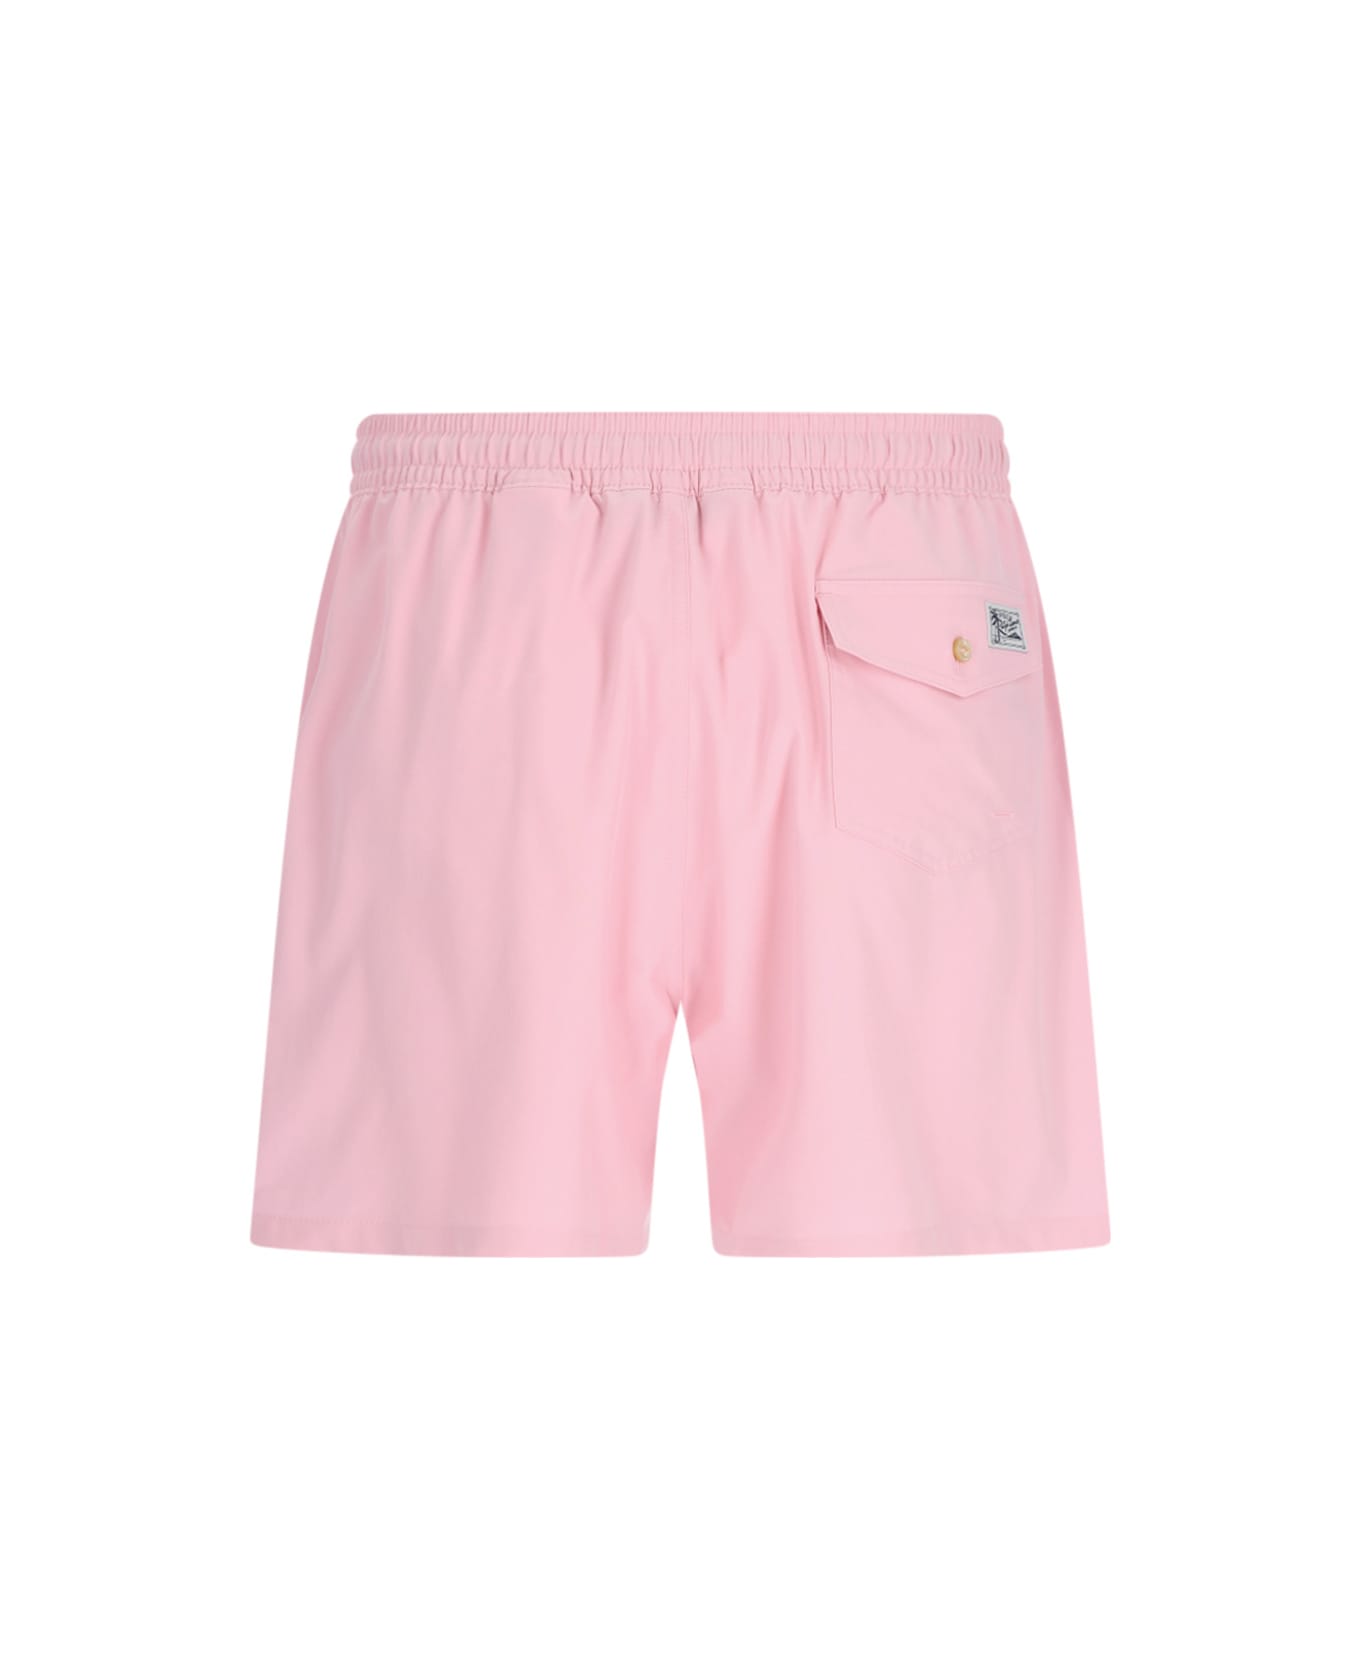 Polo Ralph Lauren 'traveler' Swim Shorts - Garden pink 水着